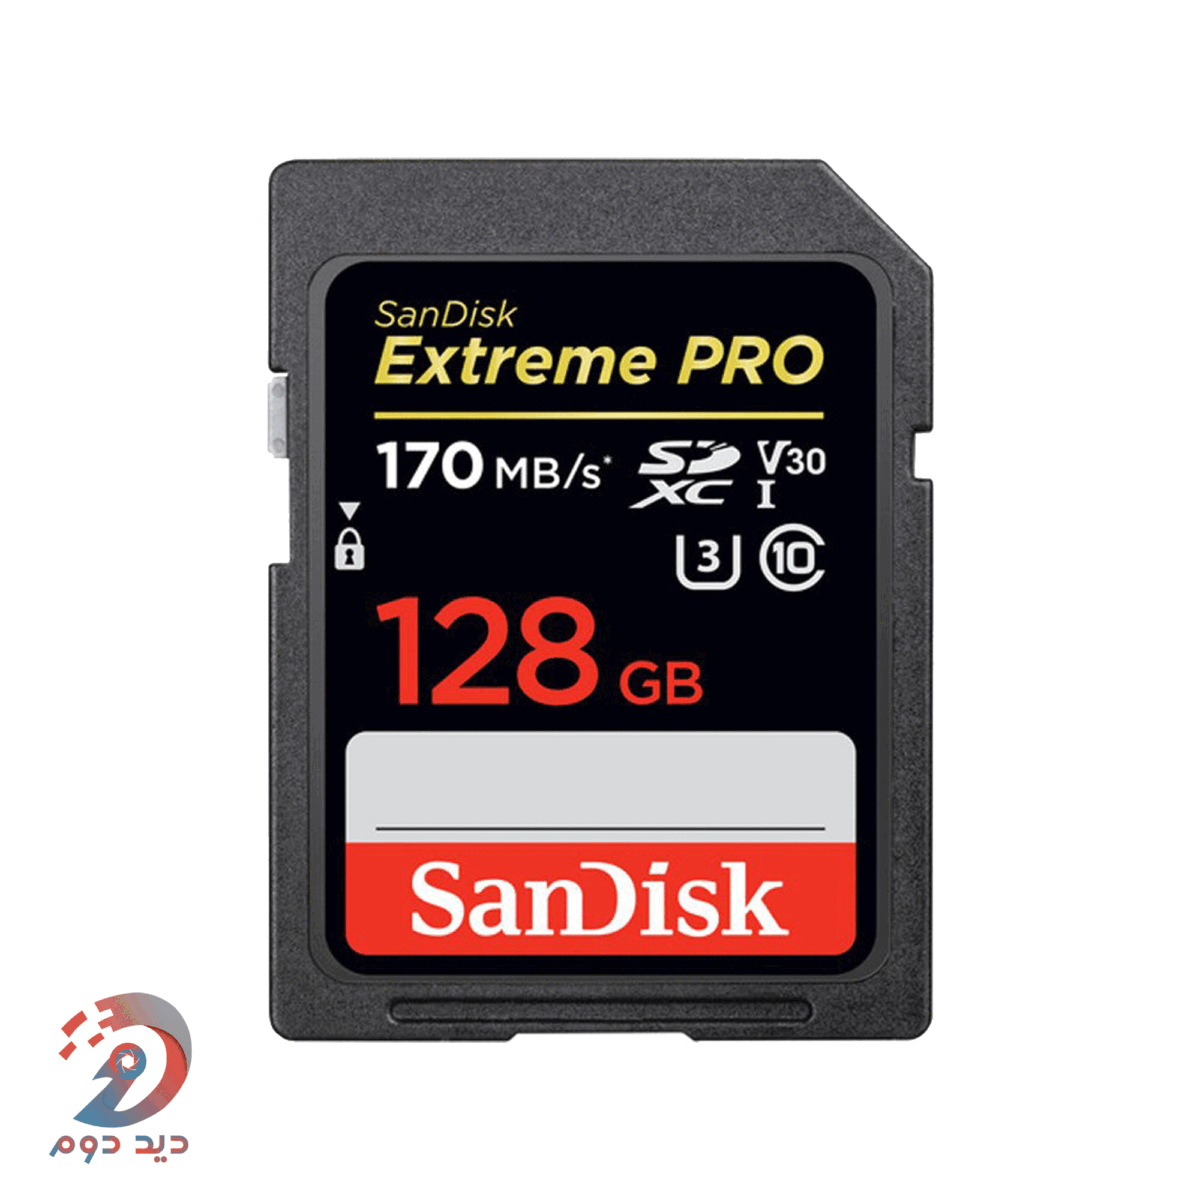 Sandisk-SD-128-GB-170-MBS